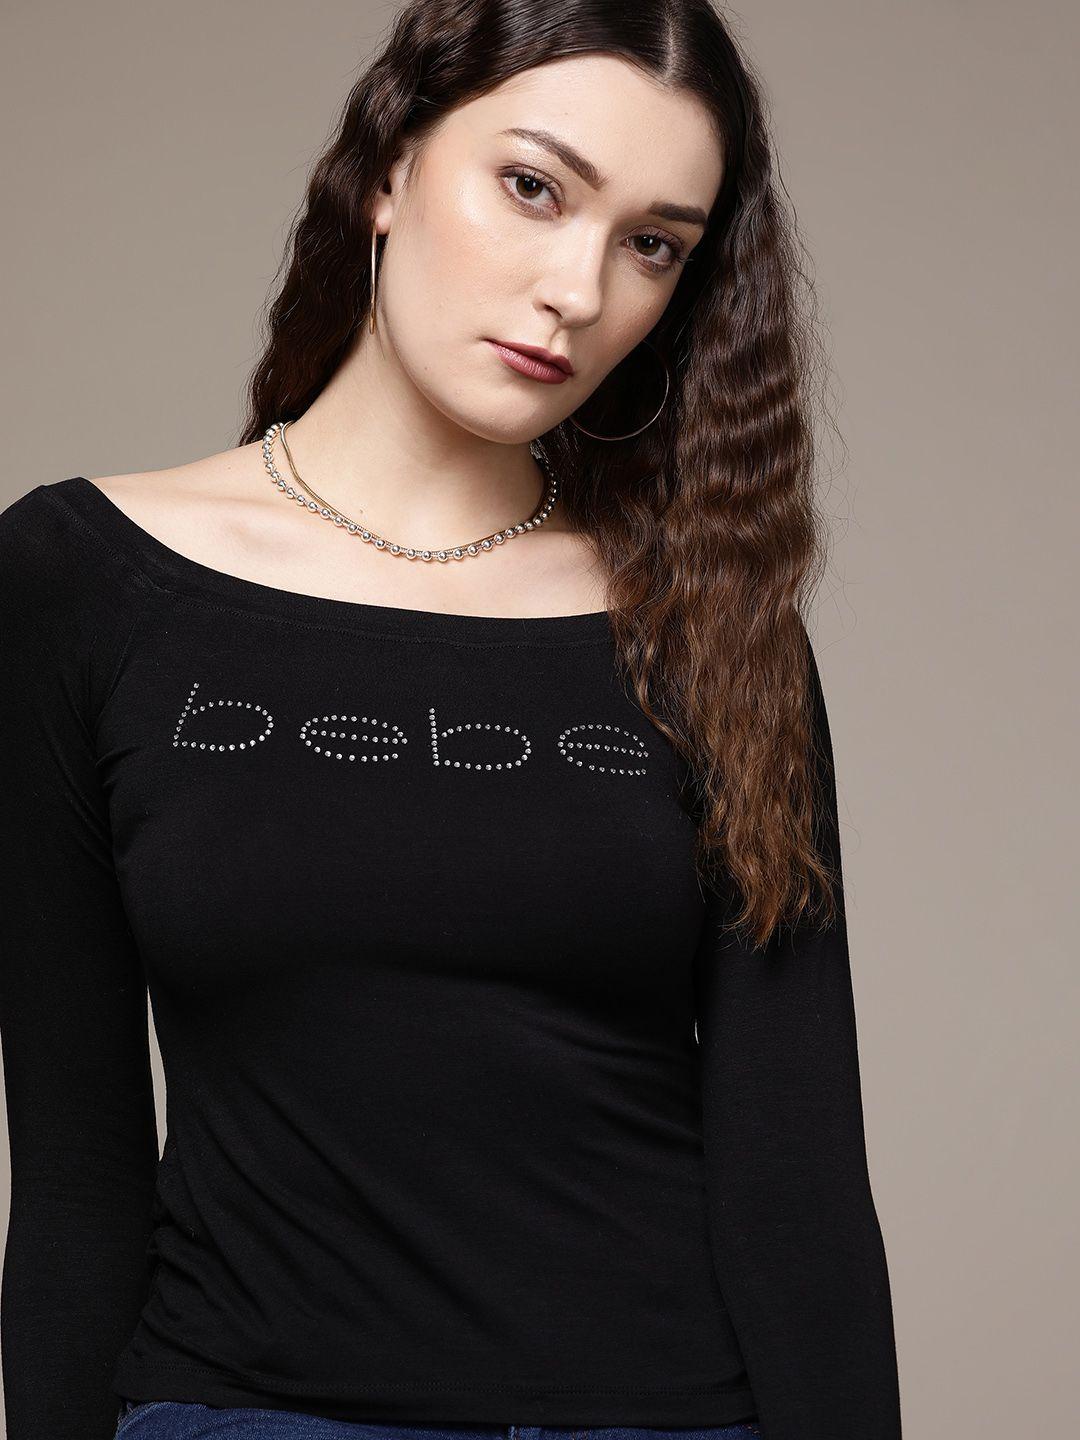 bebe women midnight black season staples brand logo embellished boat neck top